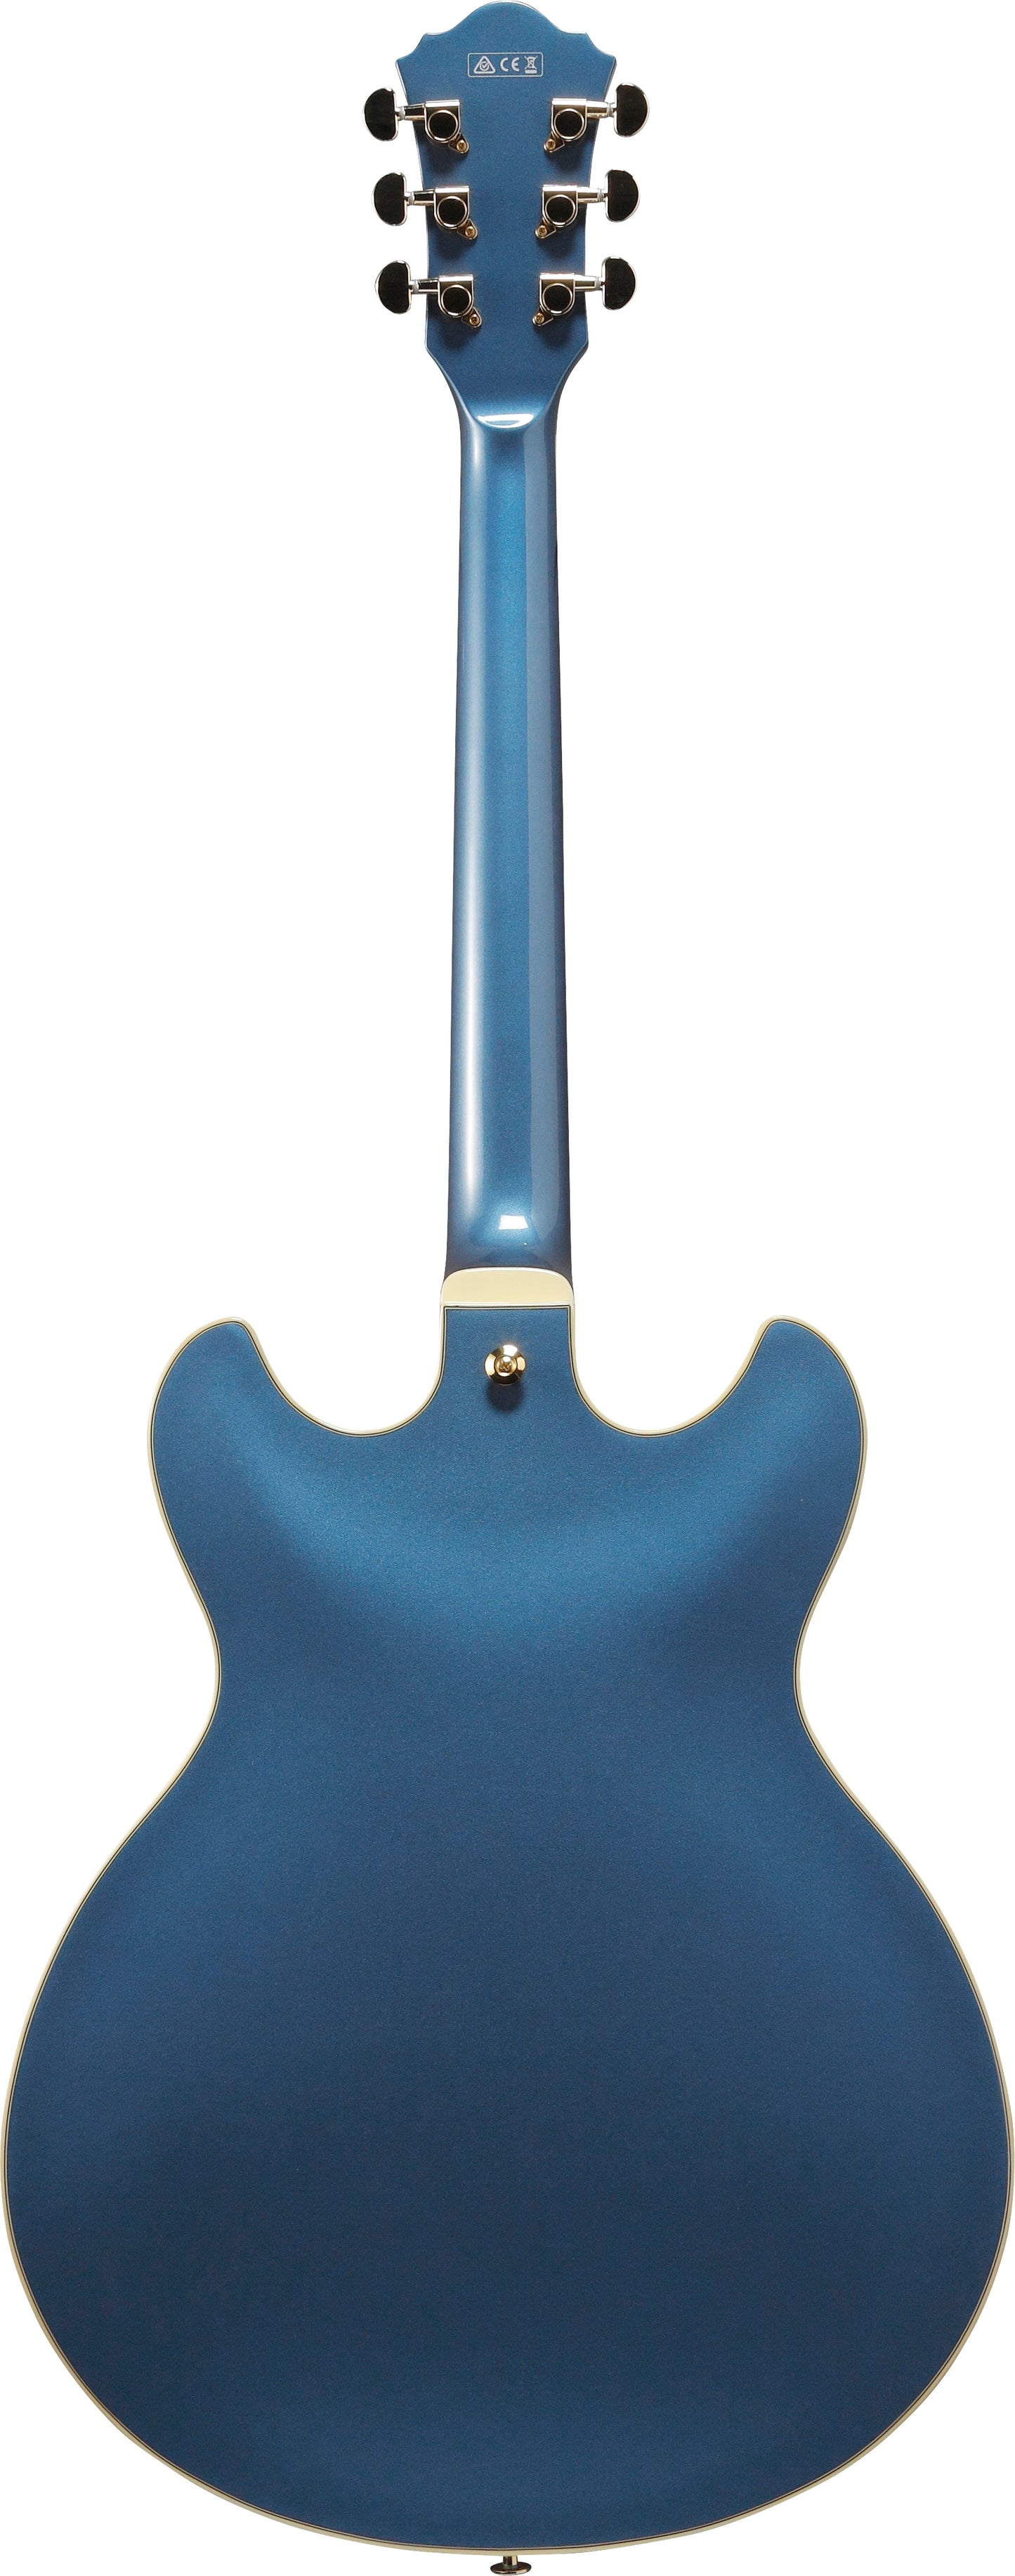 Ibanez AS73GPBM Artcore Semi Hollow Electric Guitar - Prussian Blue Metallic